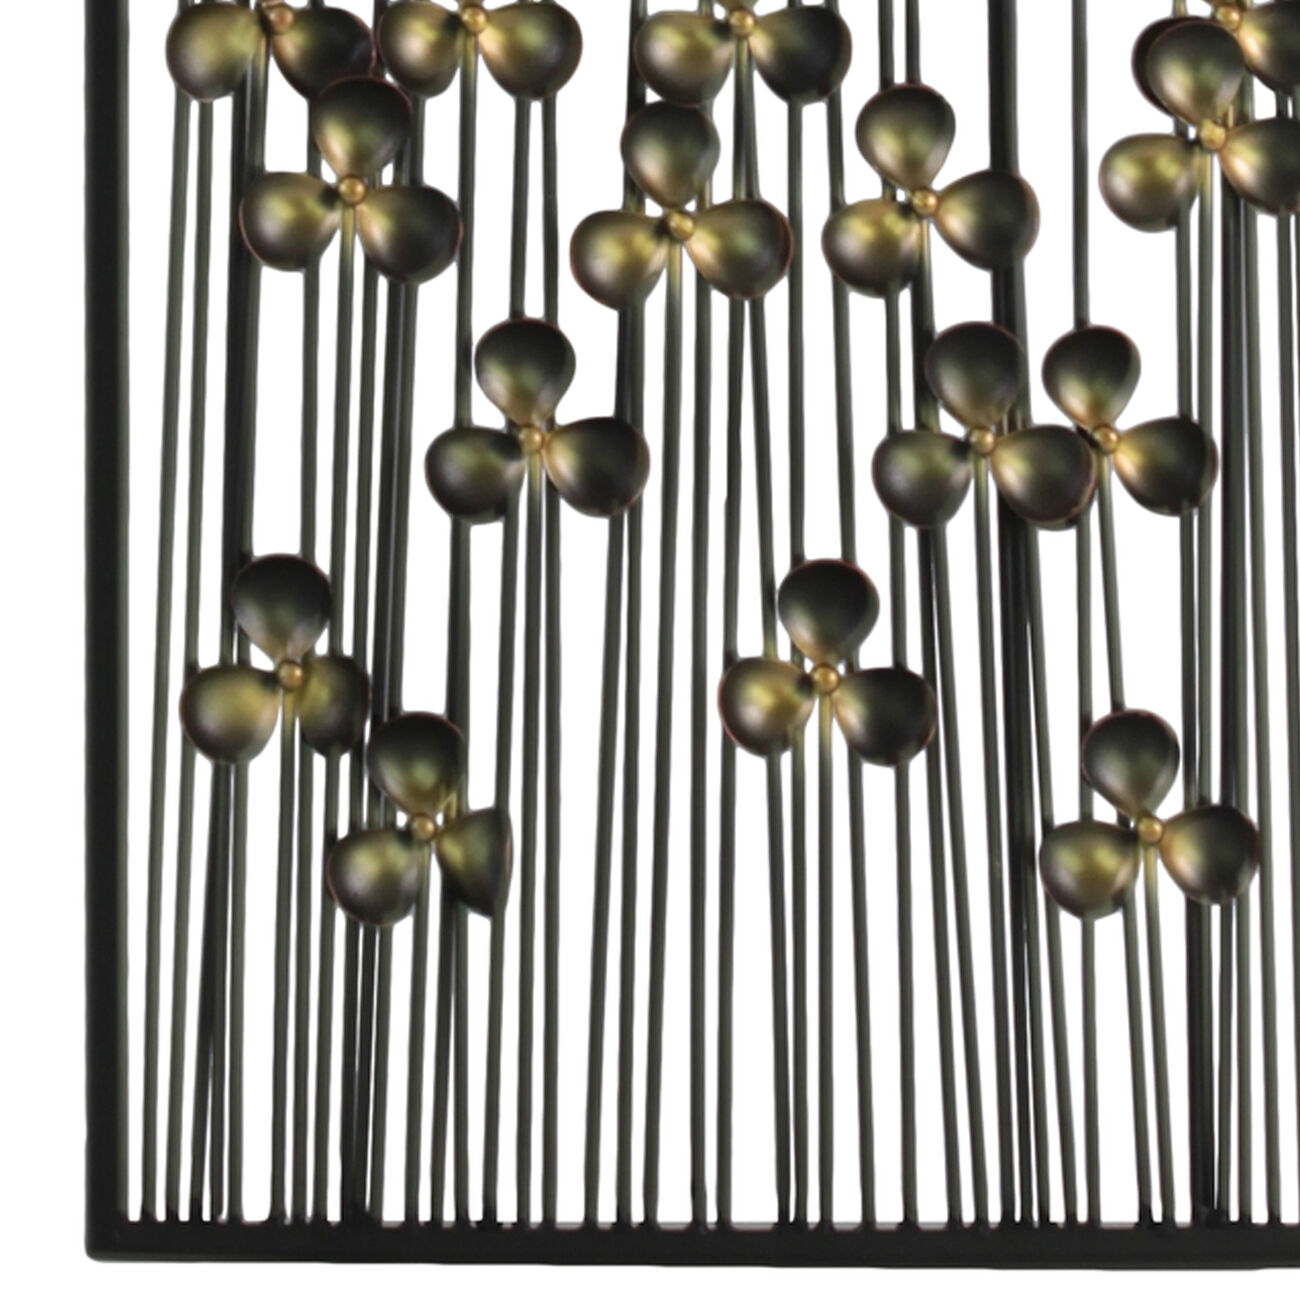 Metal Clover Leaf Design Wall Decor with Rectangular Frame, Black